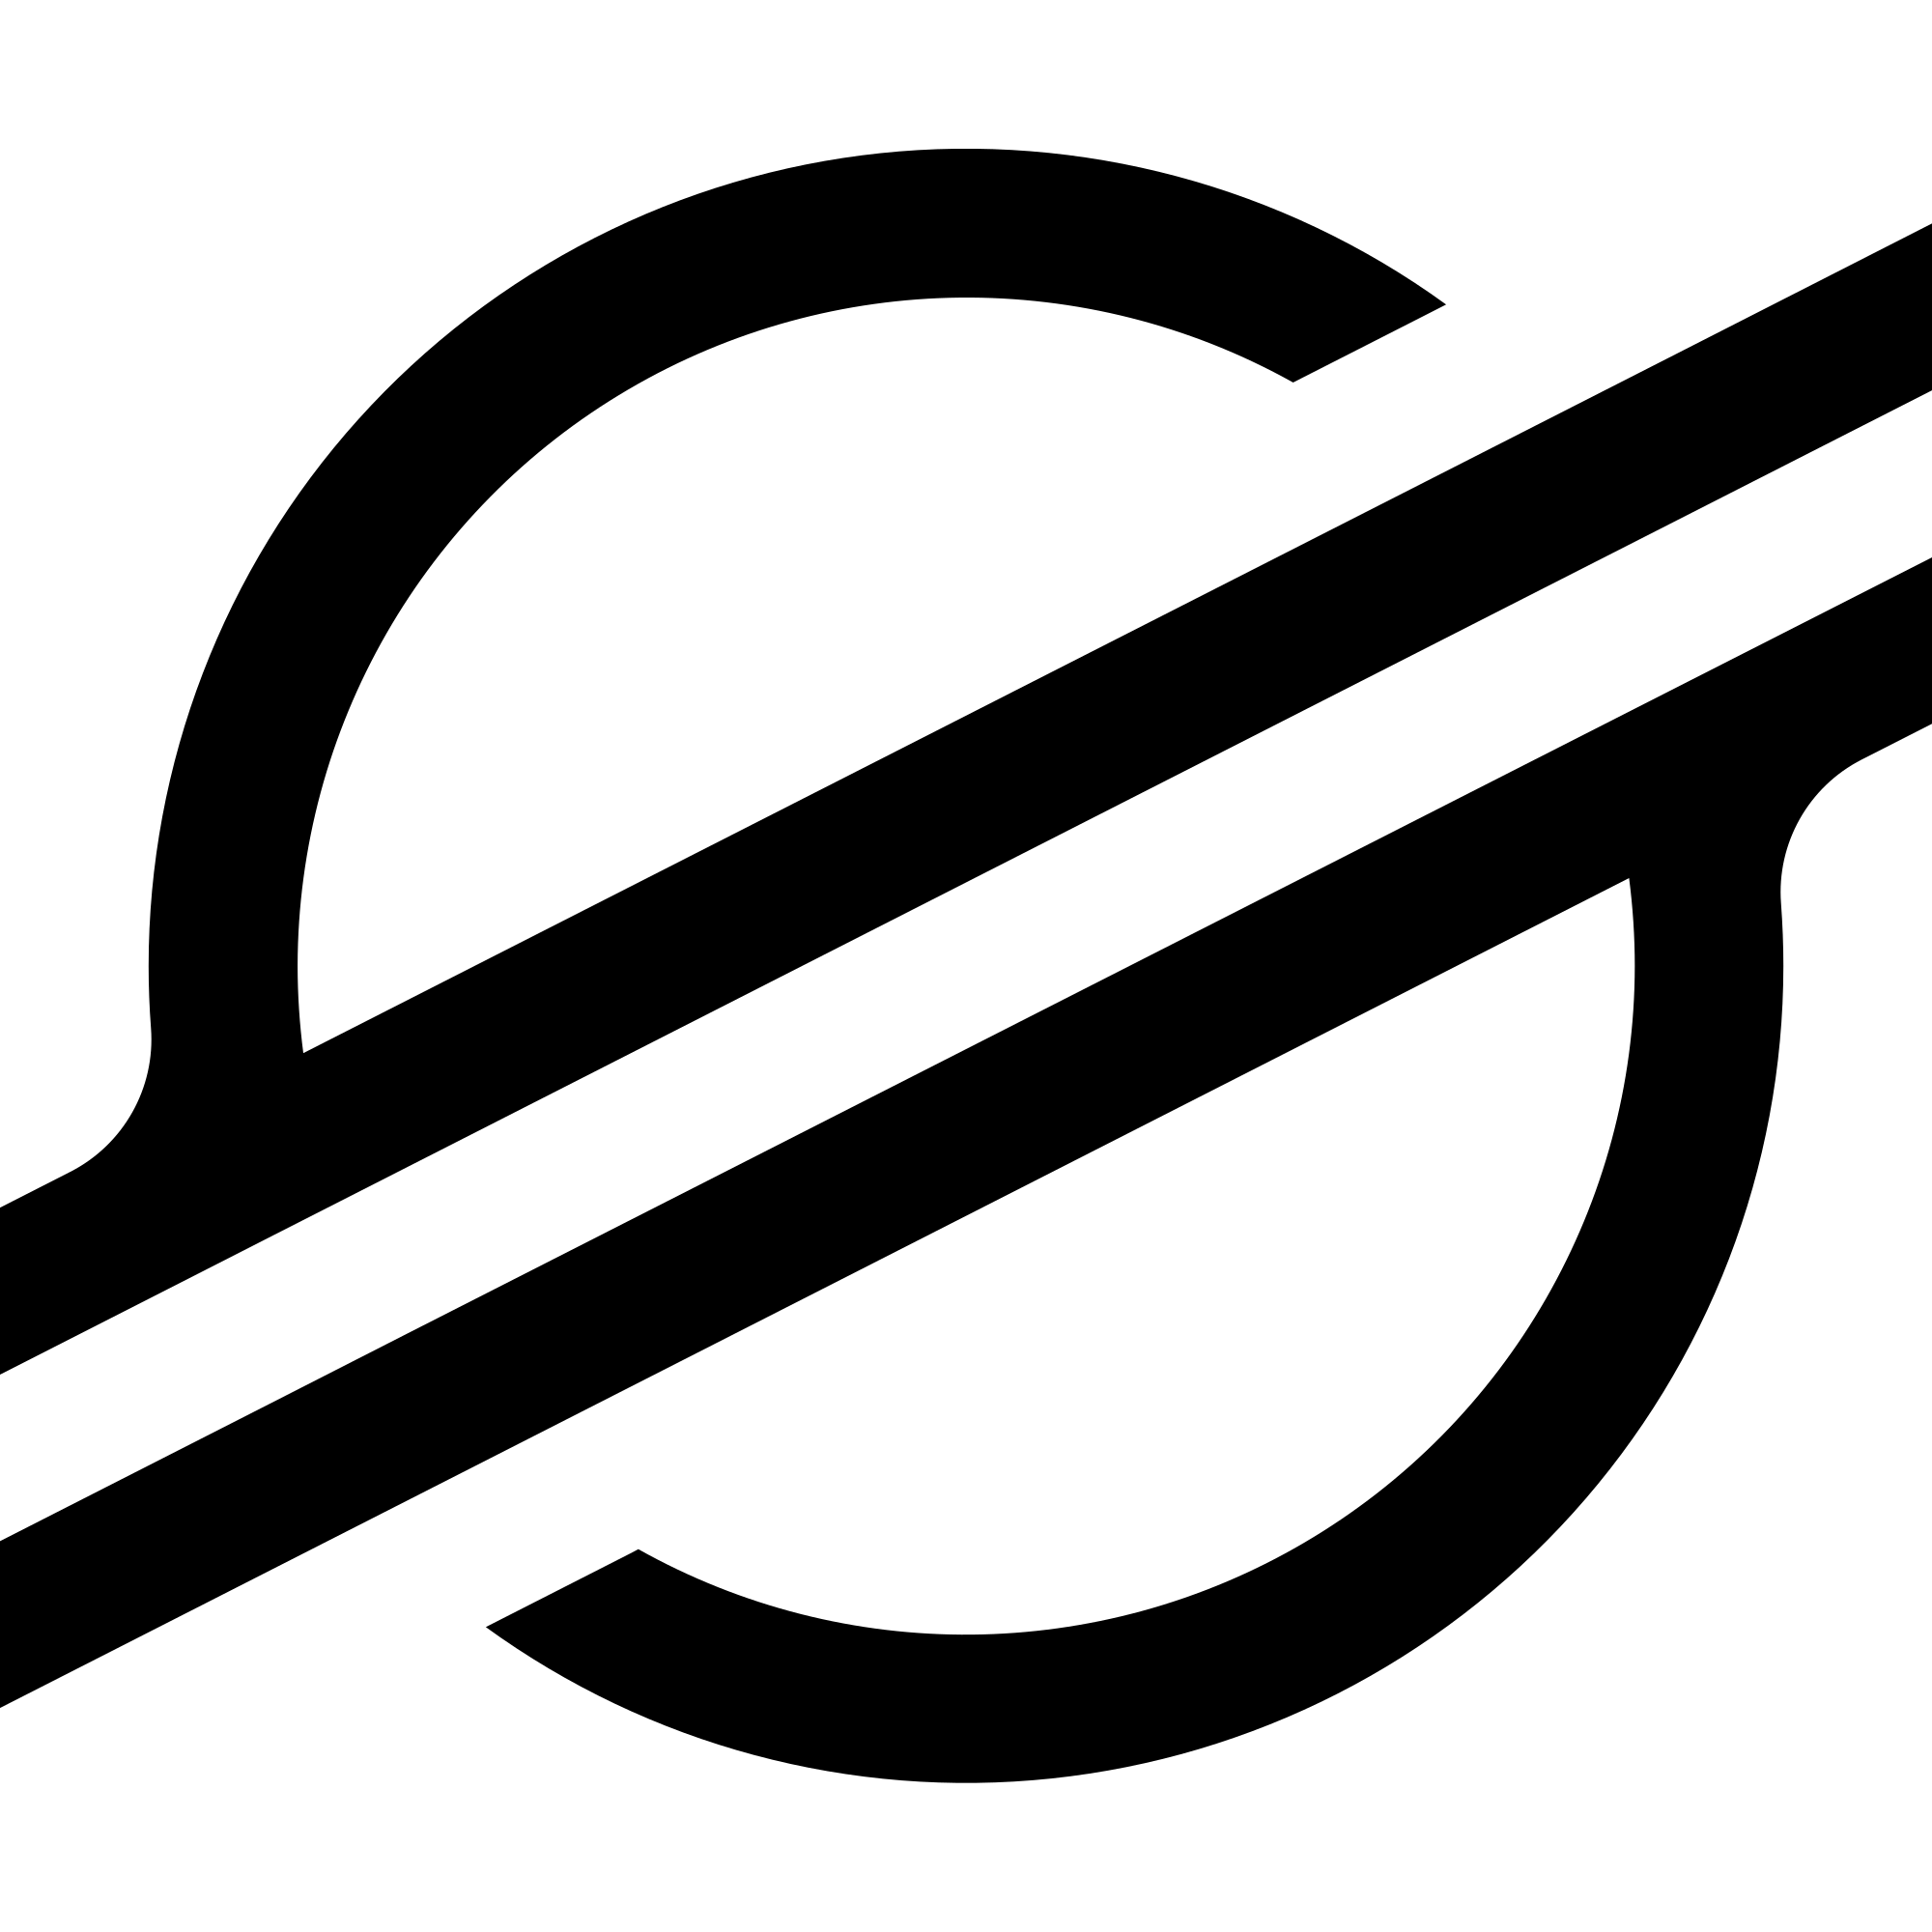 Stellar (XLM) Logo .SVG and .PNG Files Download